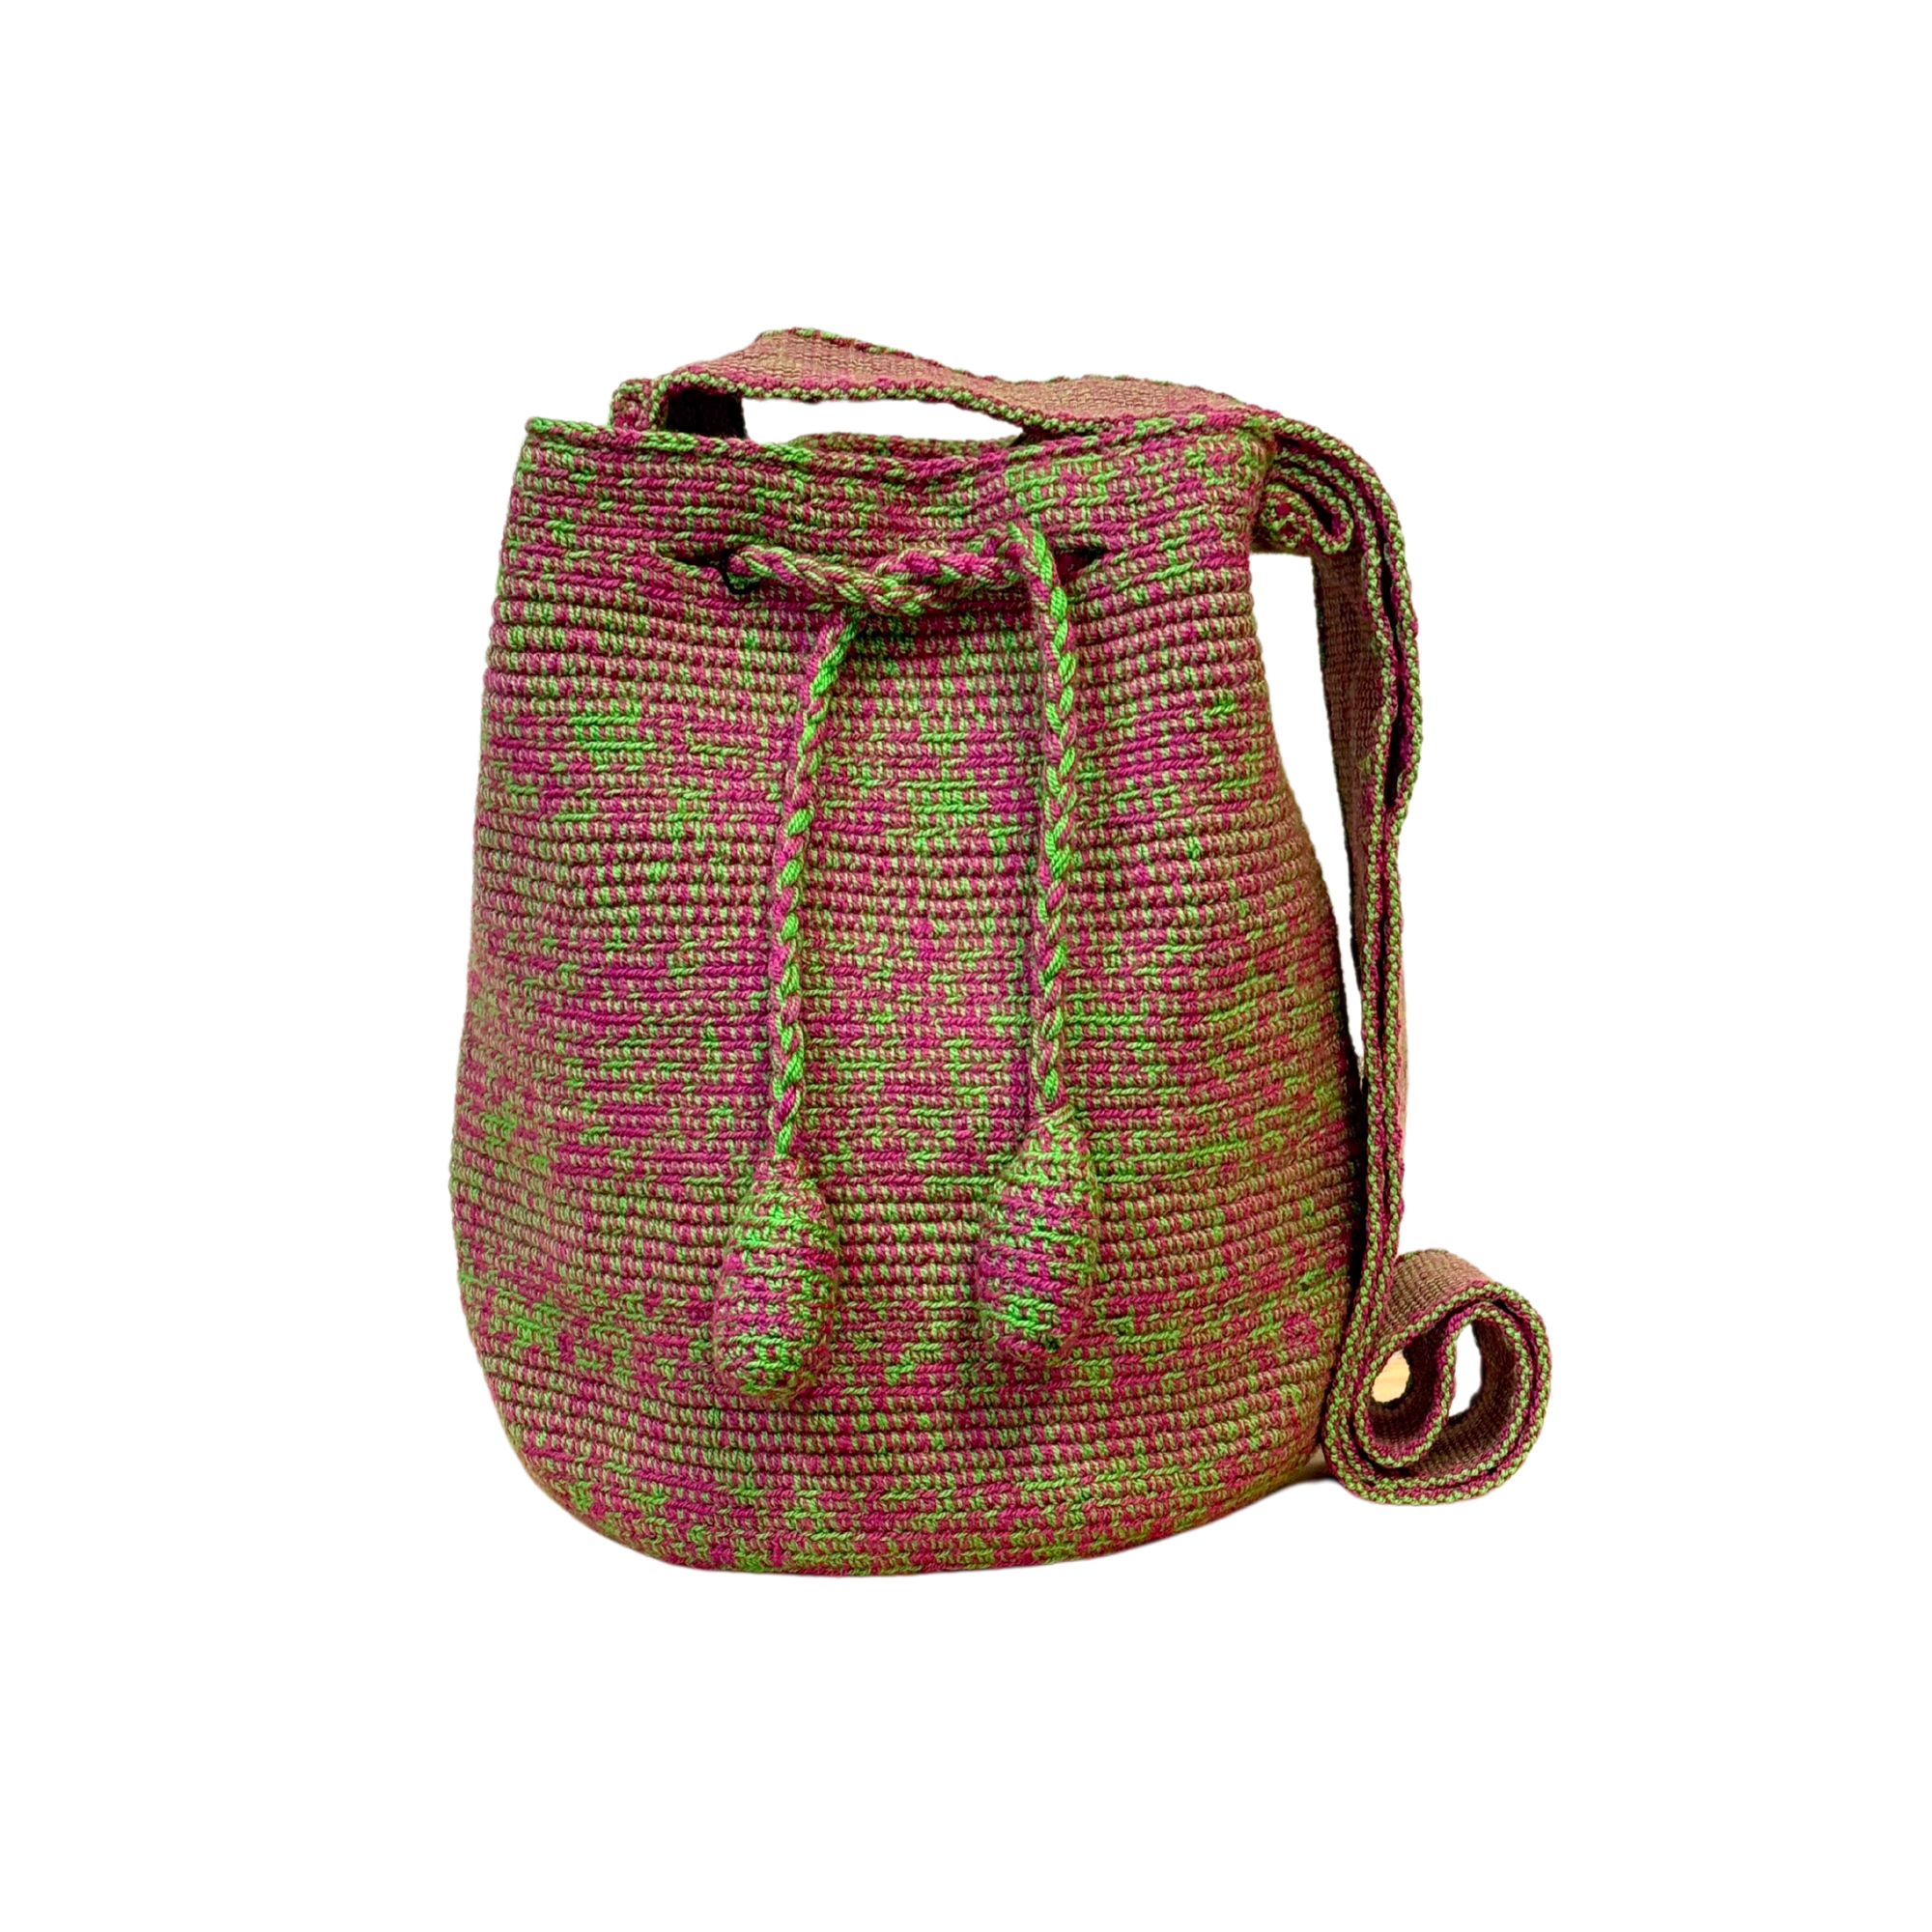 Wayuu mochila bag | Medium Traditional | Solid Strap | Pink and green marbled